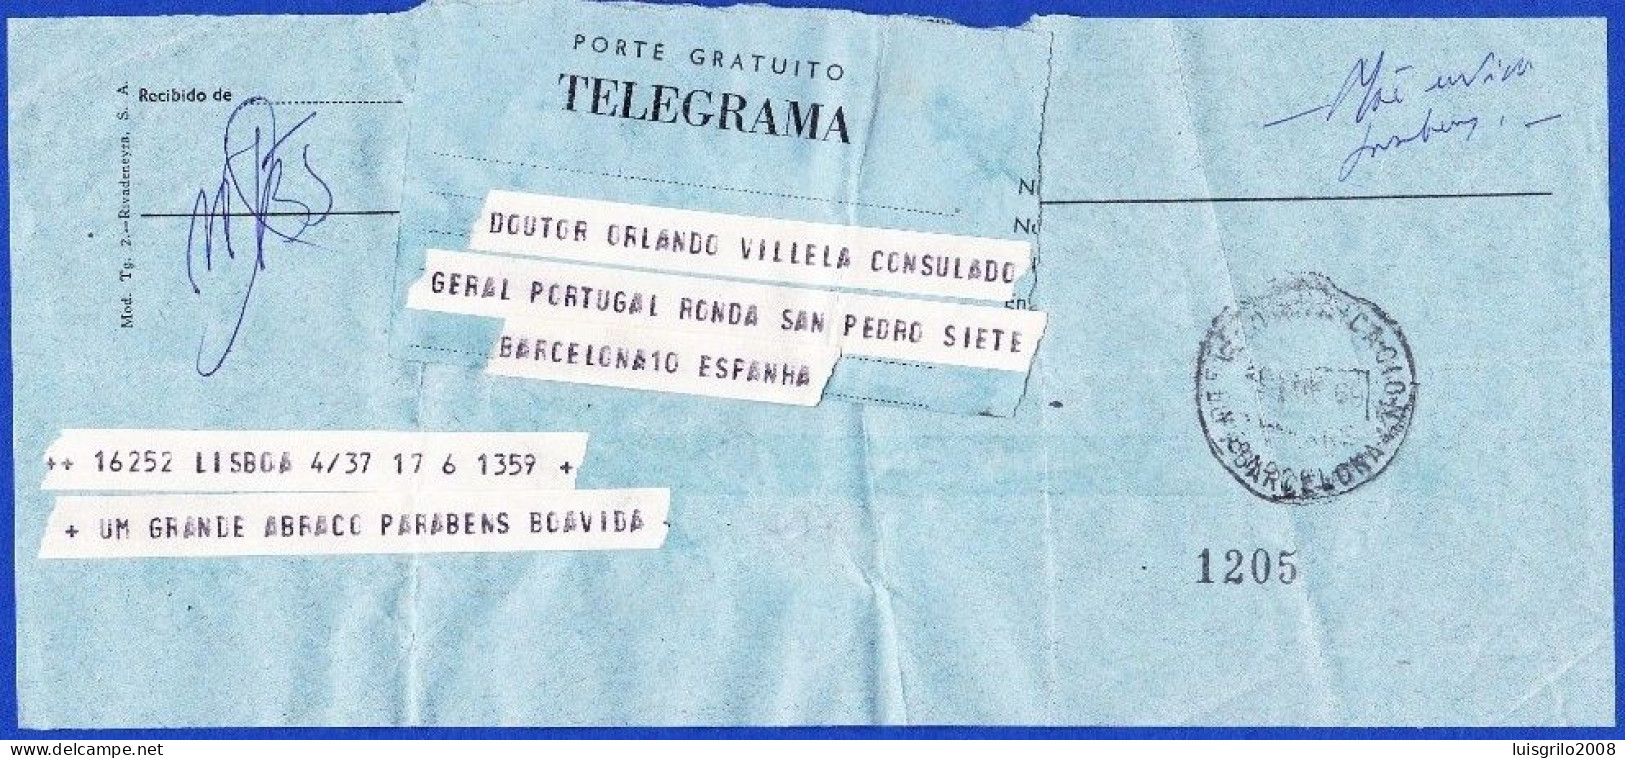 Telegrama Internacional - Lisboa > Consulado General De Portugal En Barcelona -|- Postmark - Barccelona. 1969 - Telegrafen